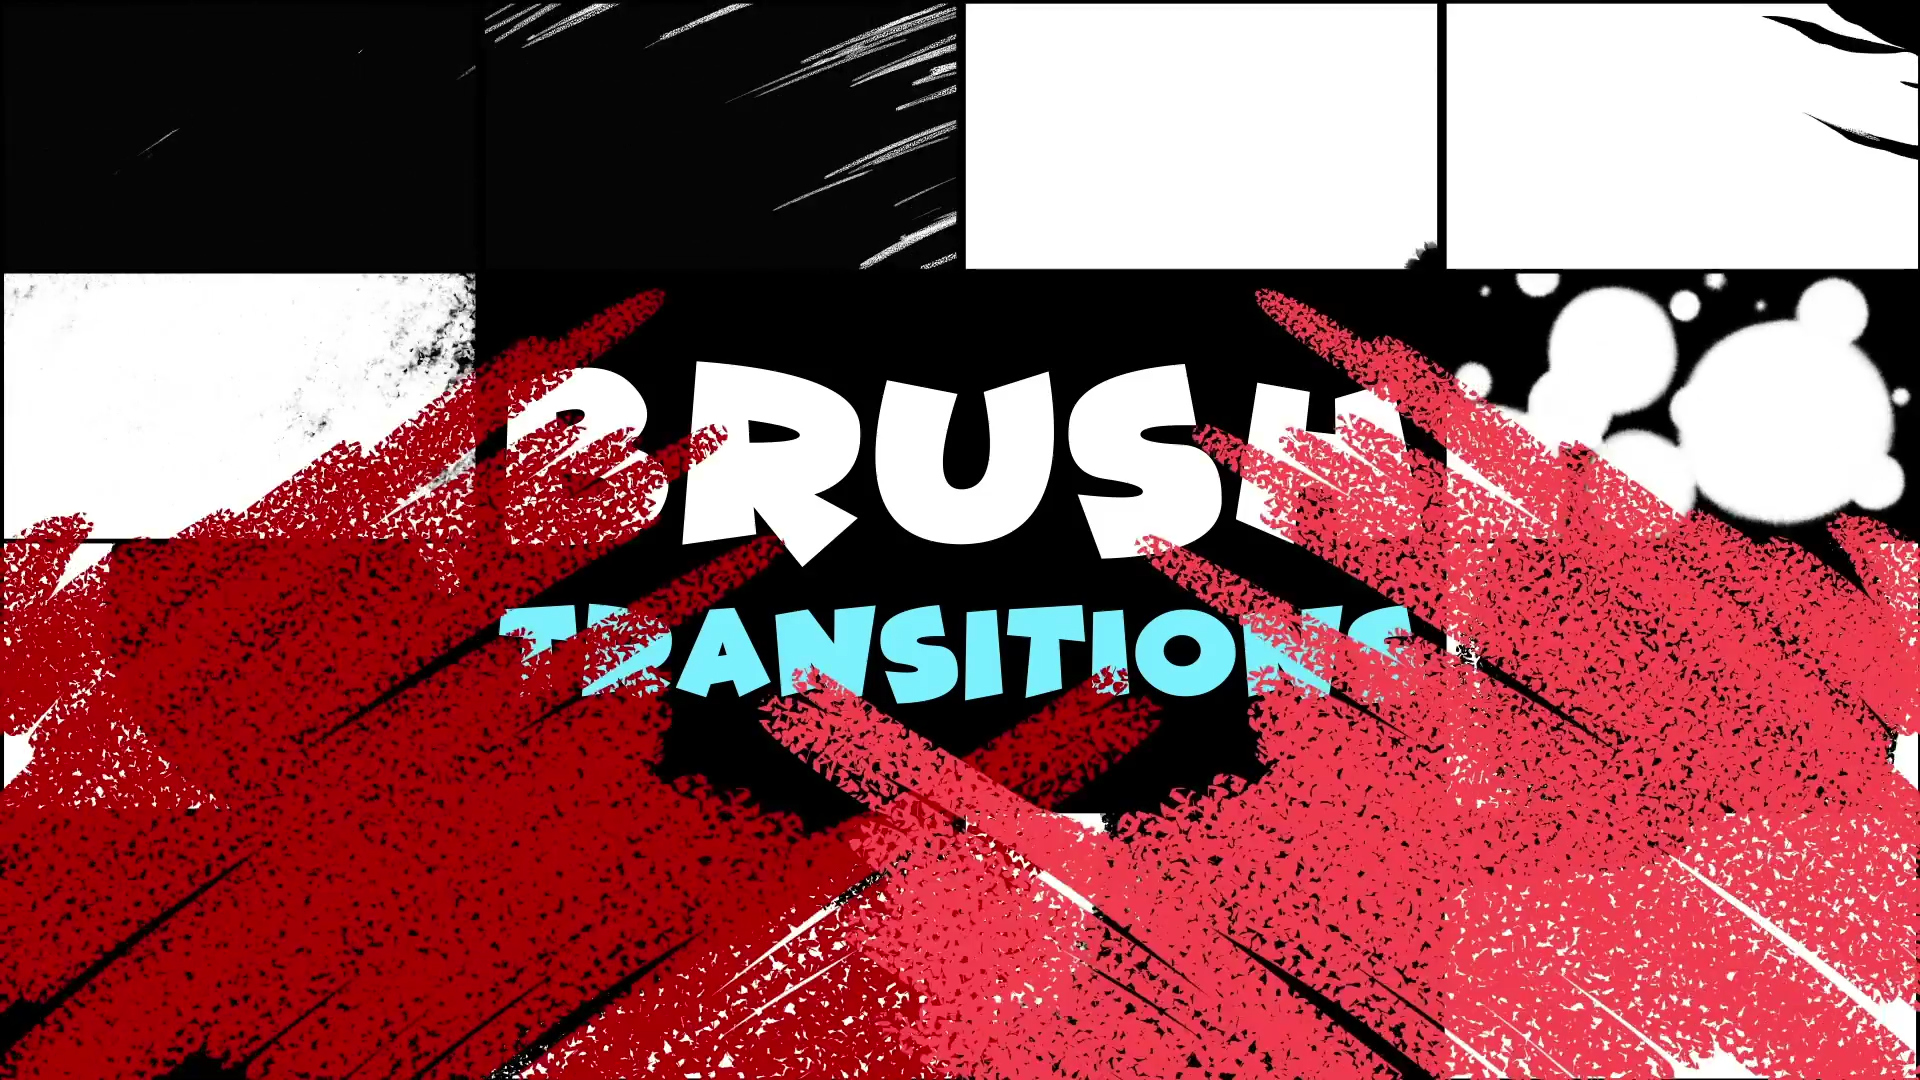 FCPX插件Brush Transitions(墨滴和手绘过渡动画模板)